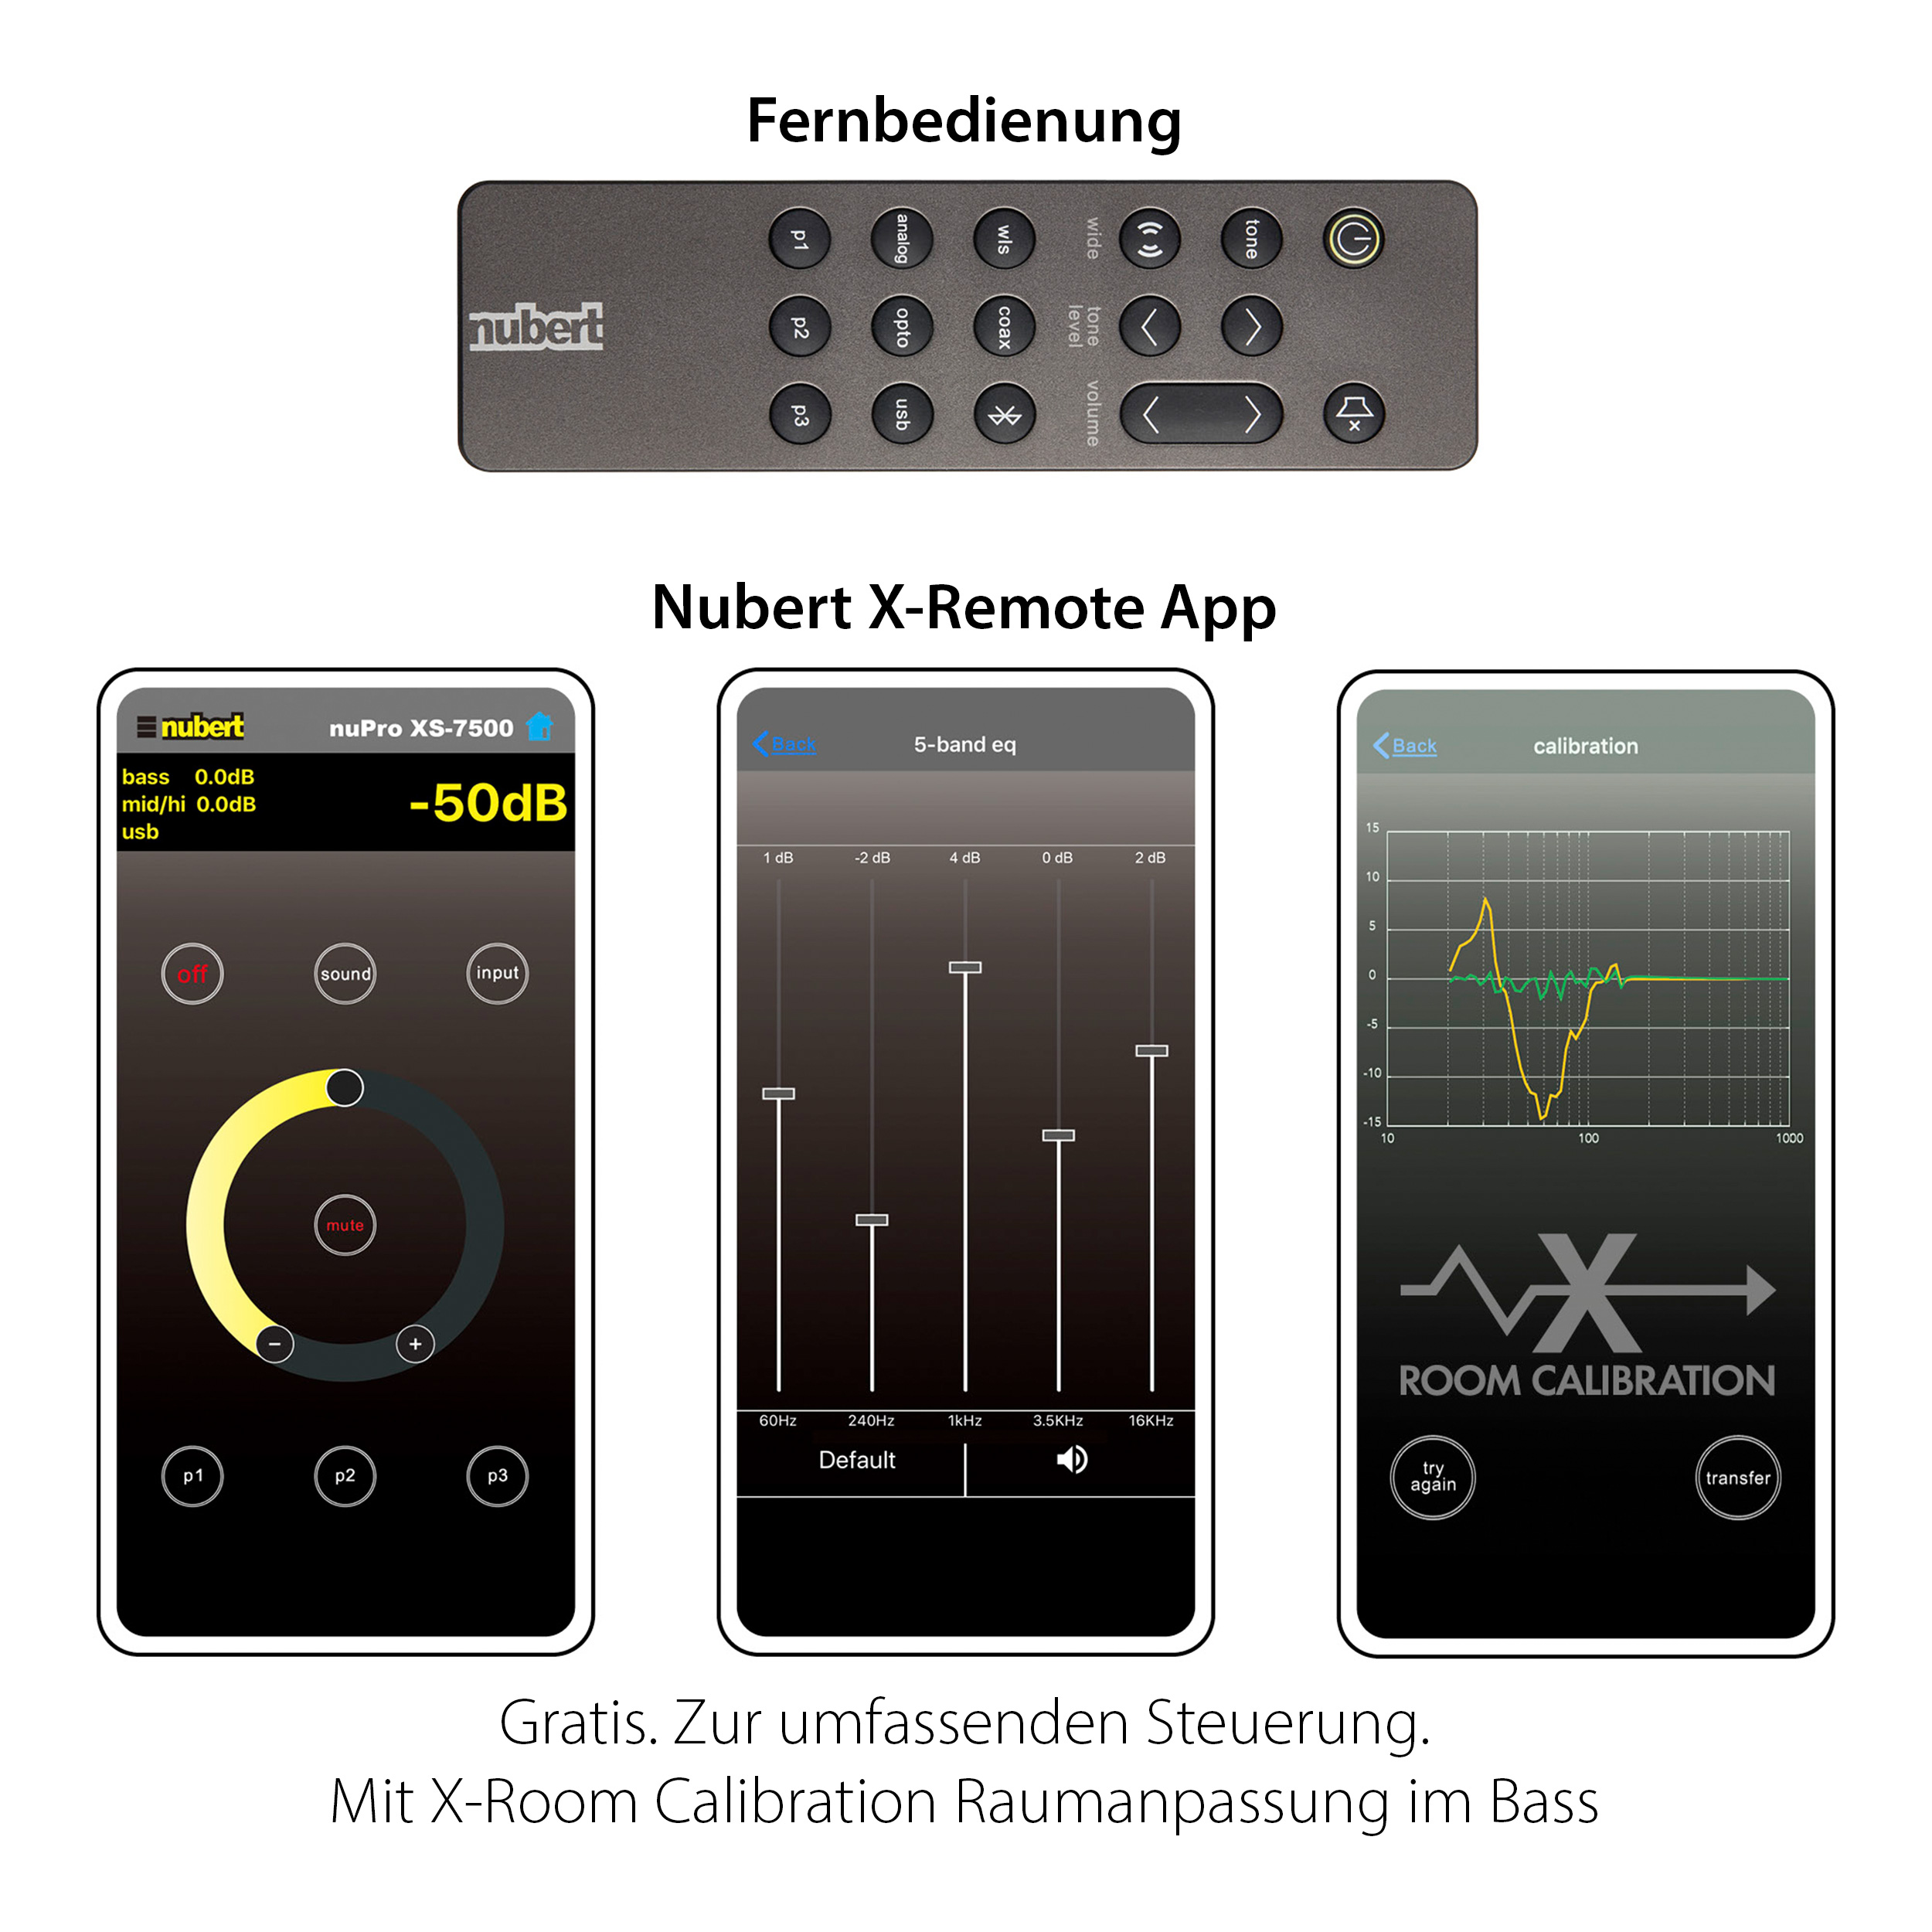  nuPro XS-7500 X-Remote App